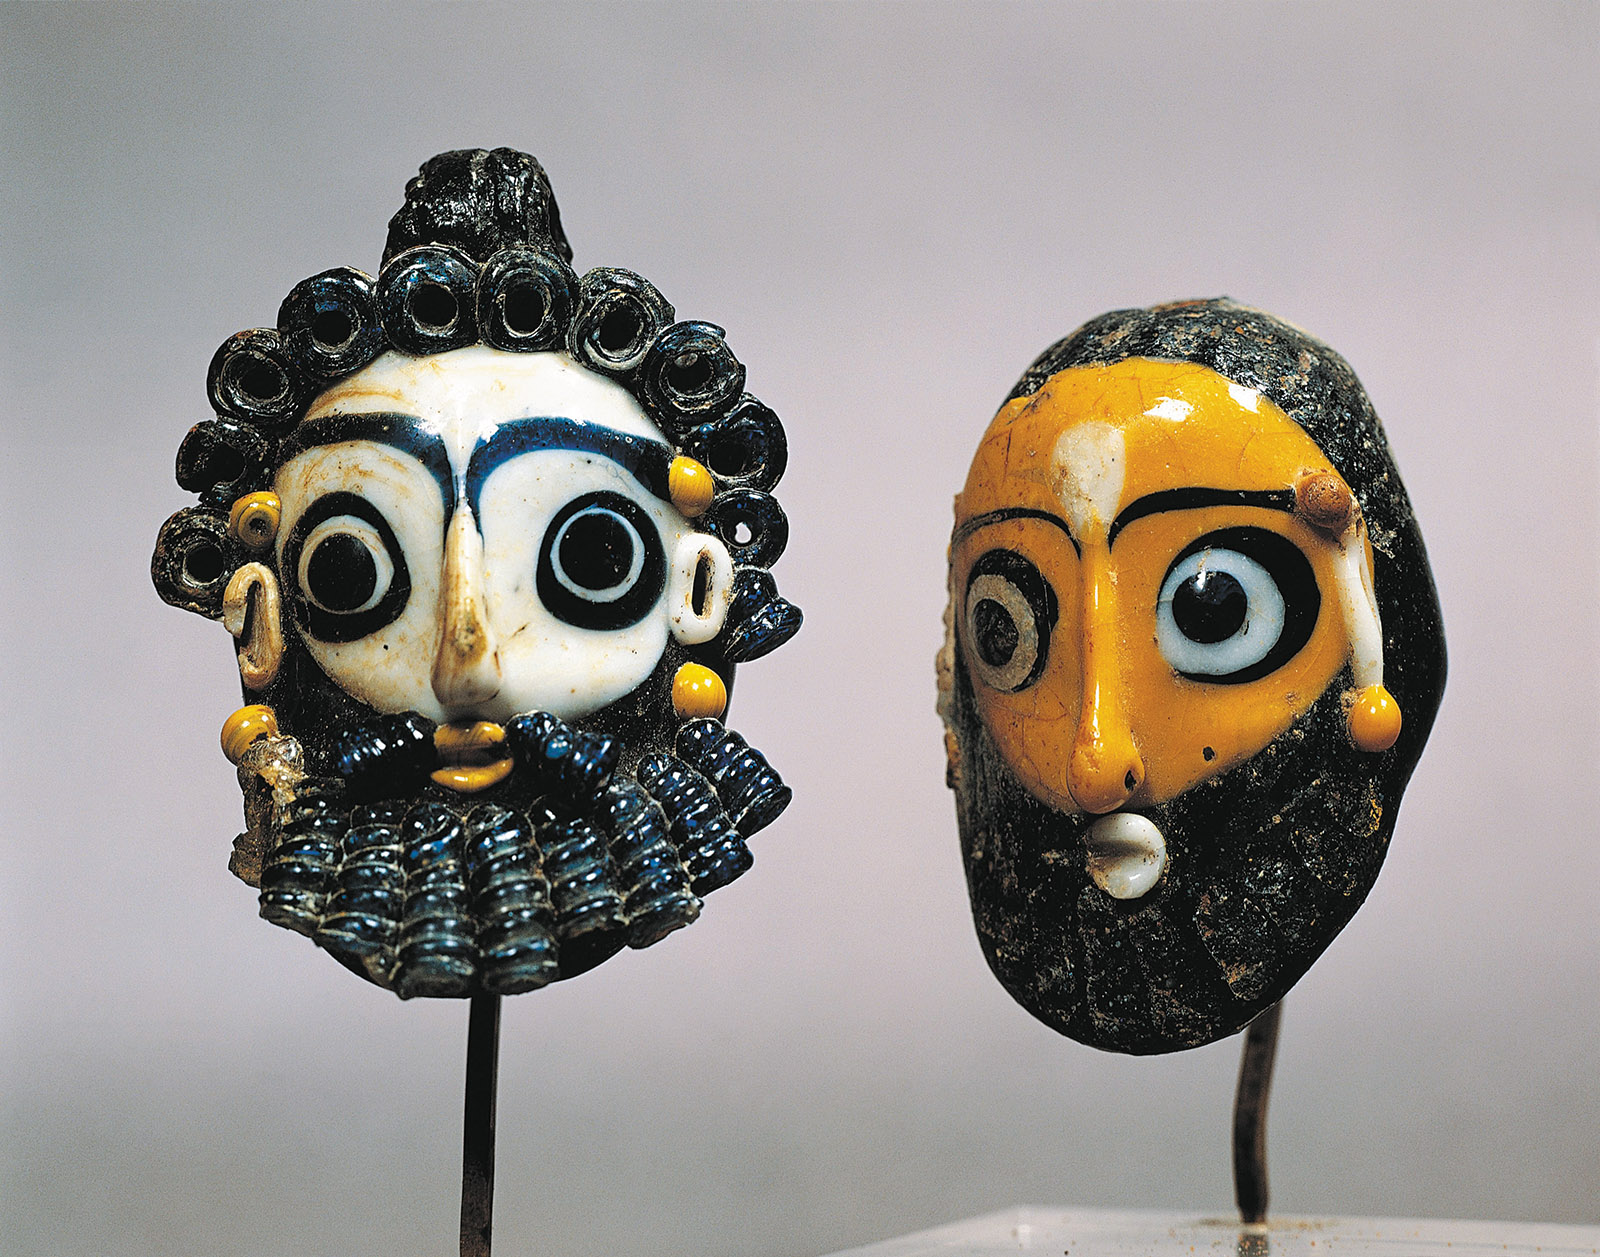 Phoenician glass masks from Carthage (modern-day Tunisia), third century BC